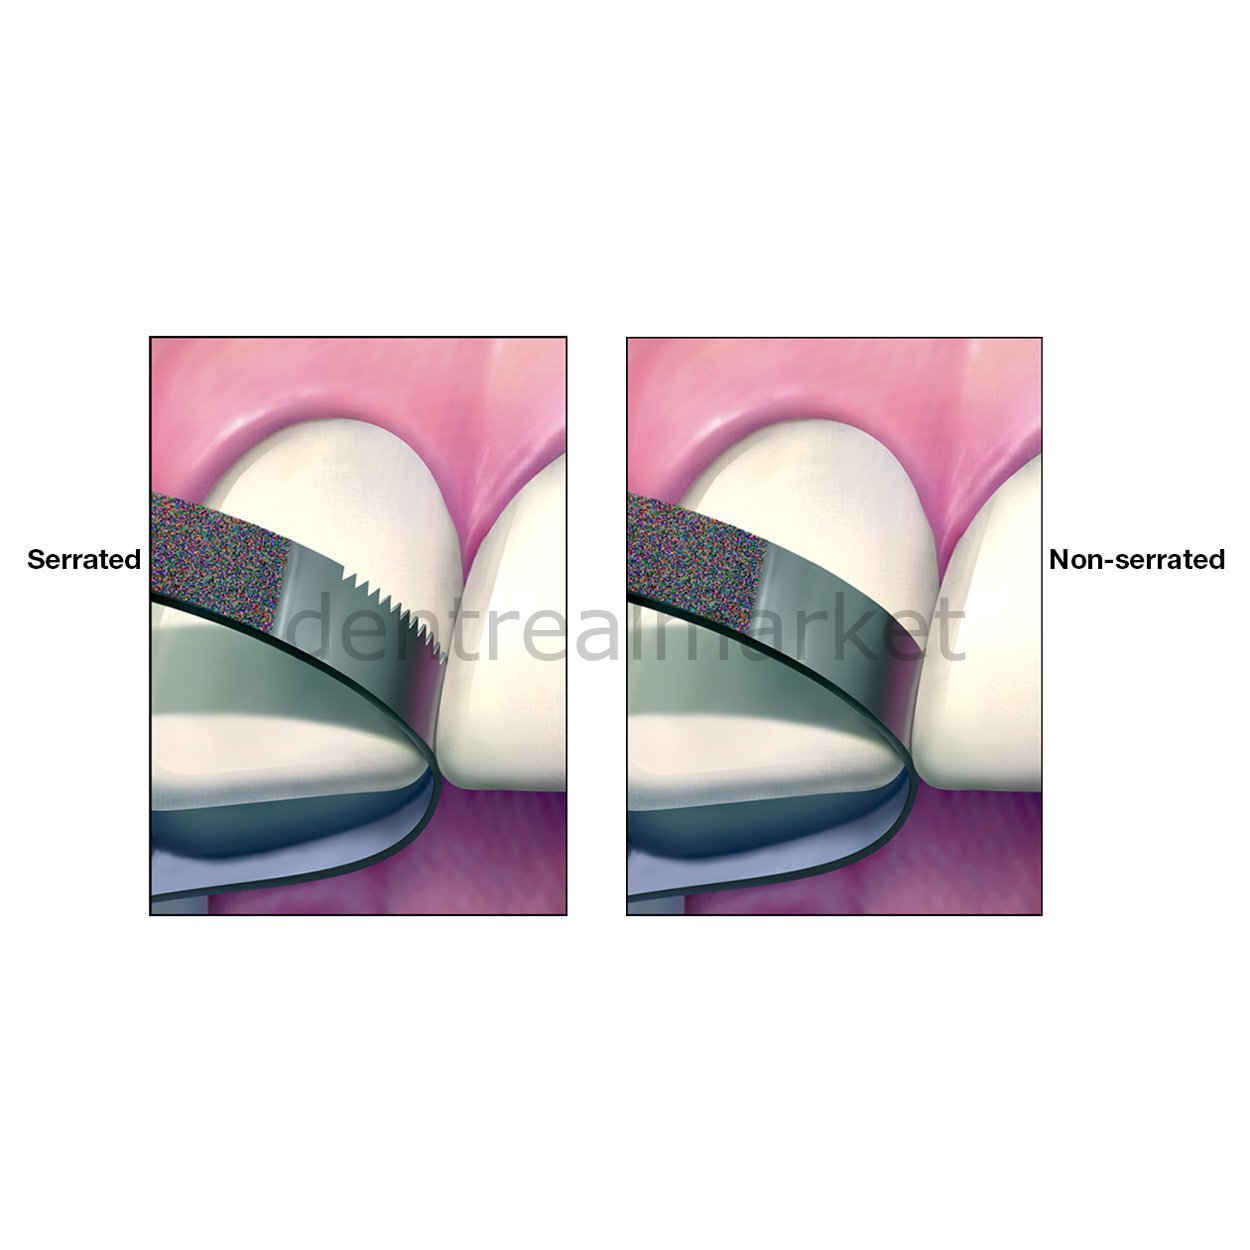 DentrealStore - Frank Dental Metal Interface Sanding Diamond Strip 3.75 mm